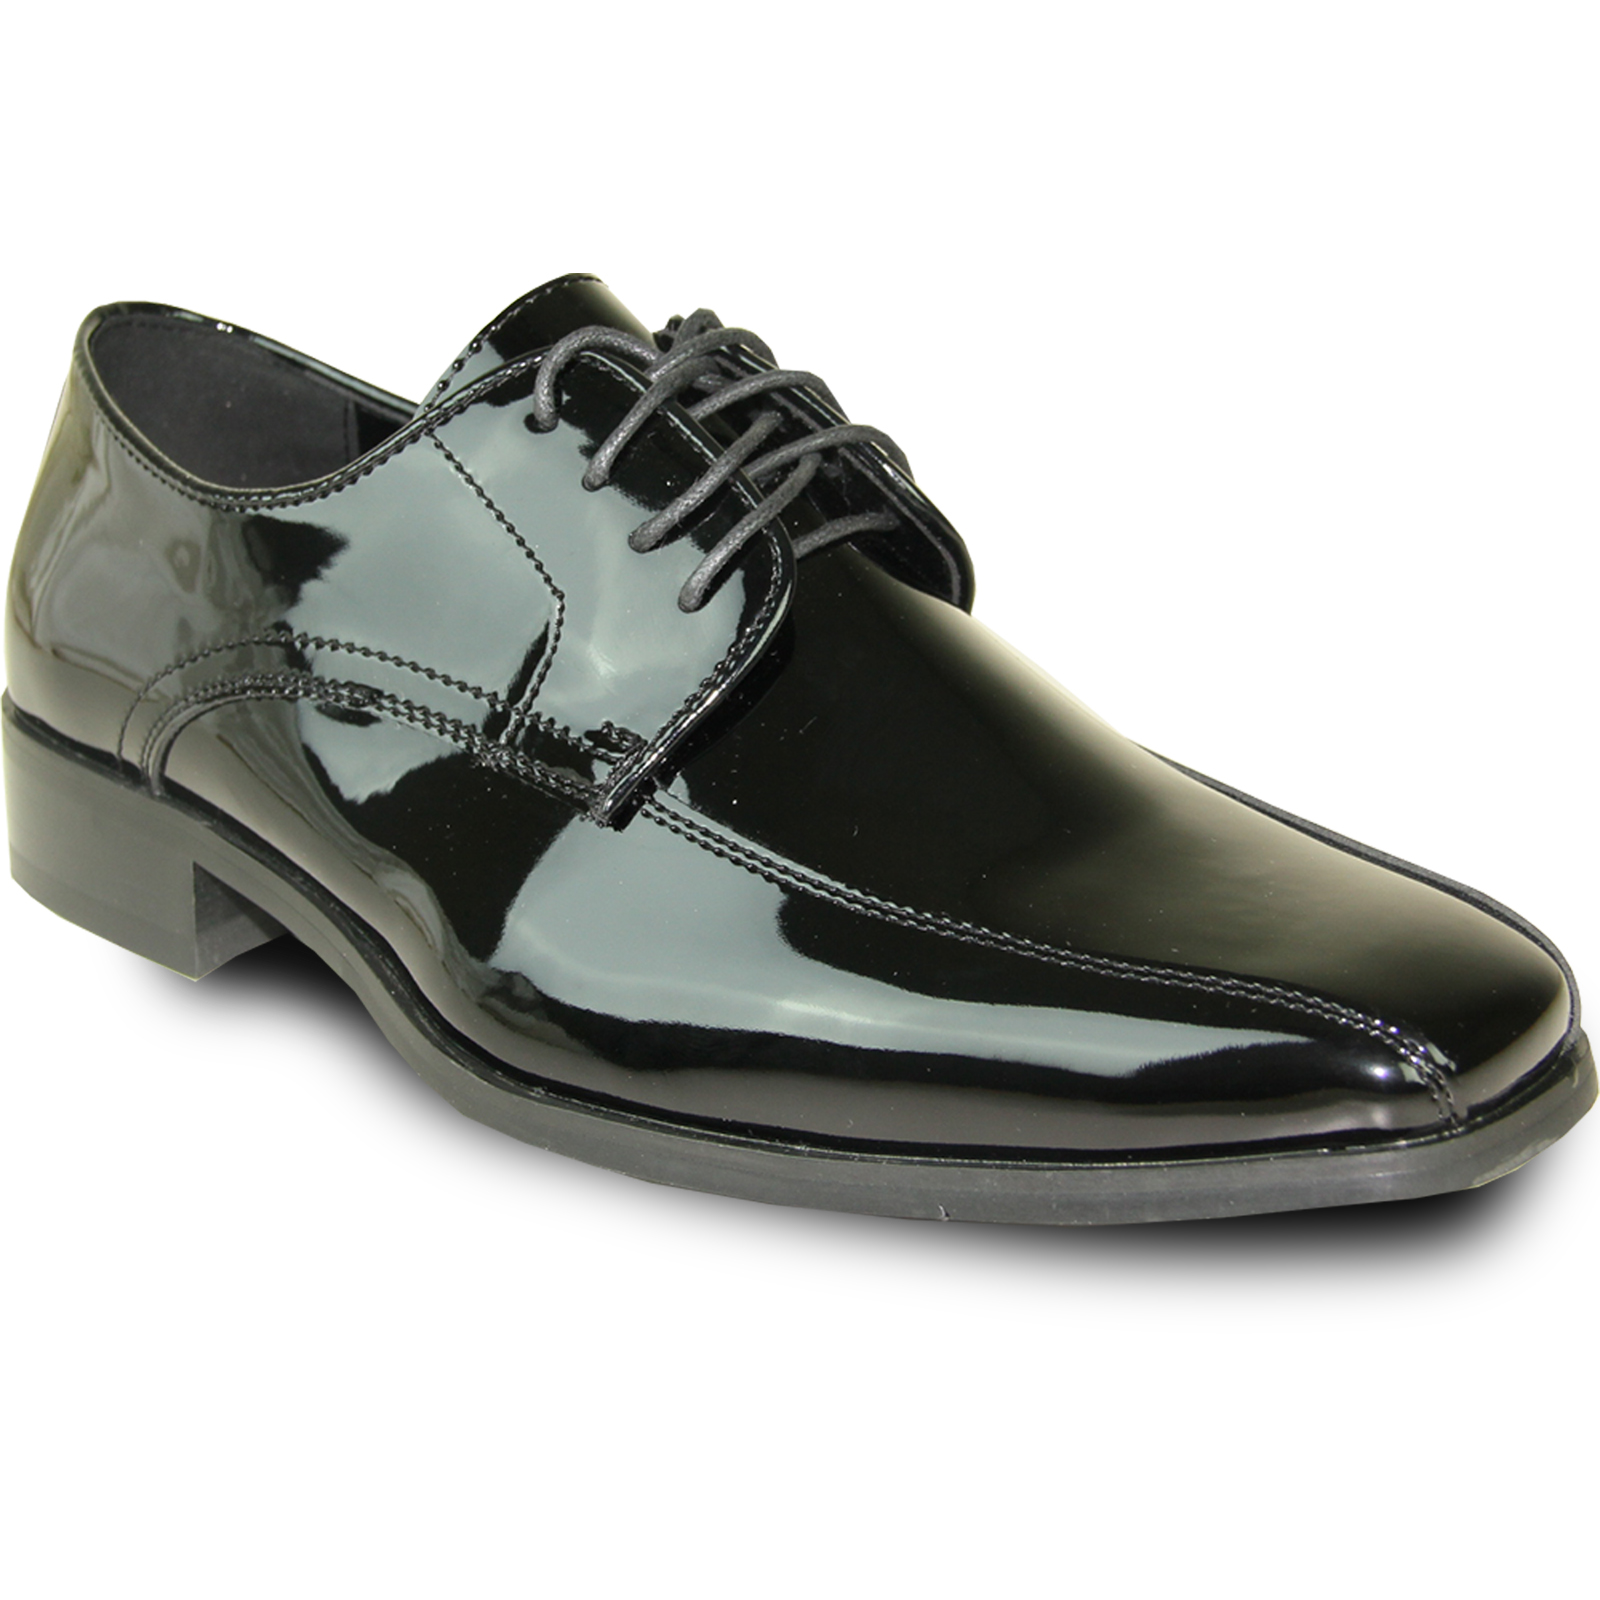  Rental  Black Double Runner Patent Leather Shoe  John s 